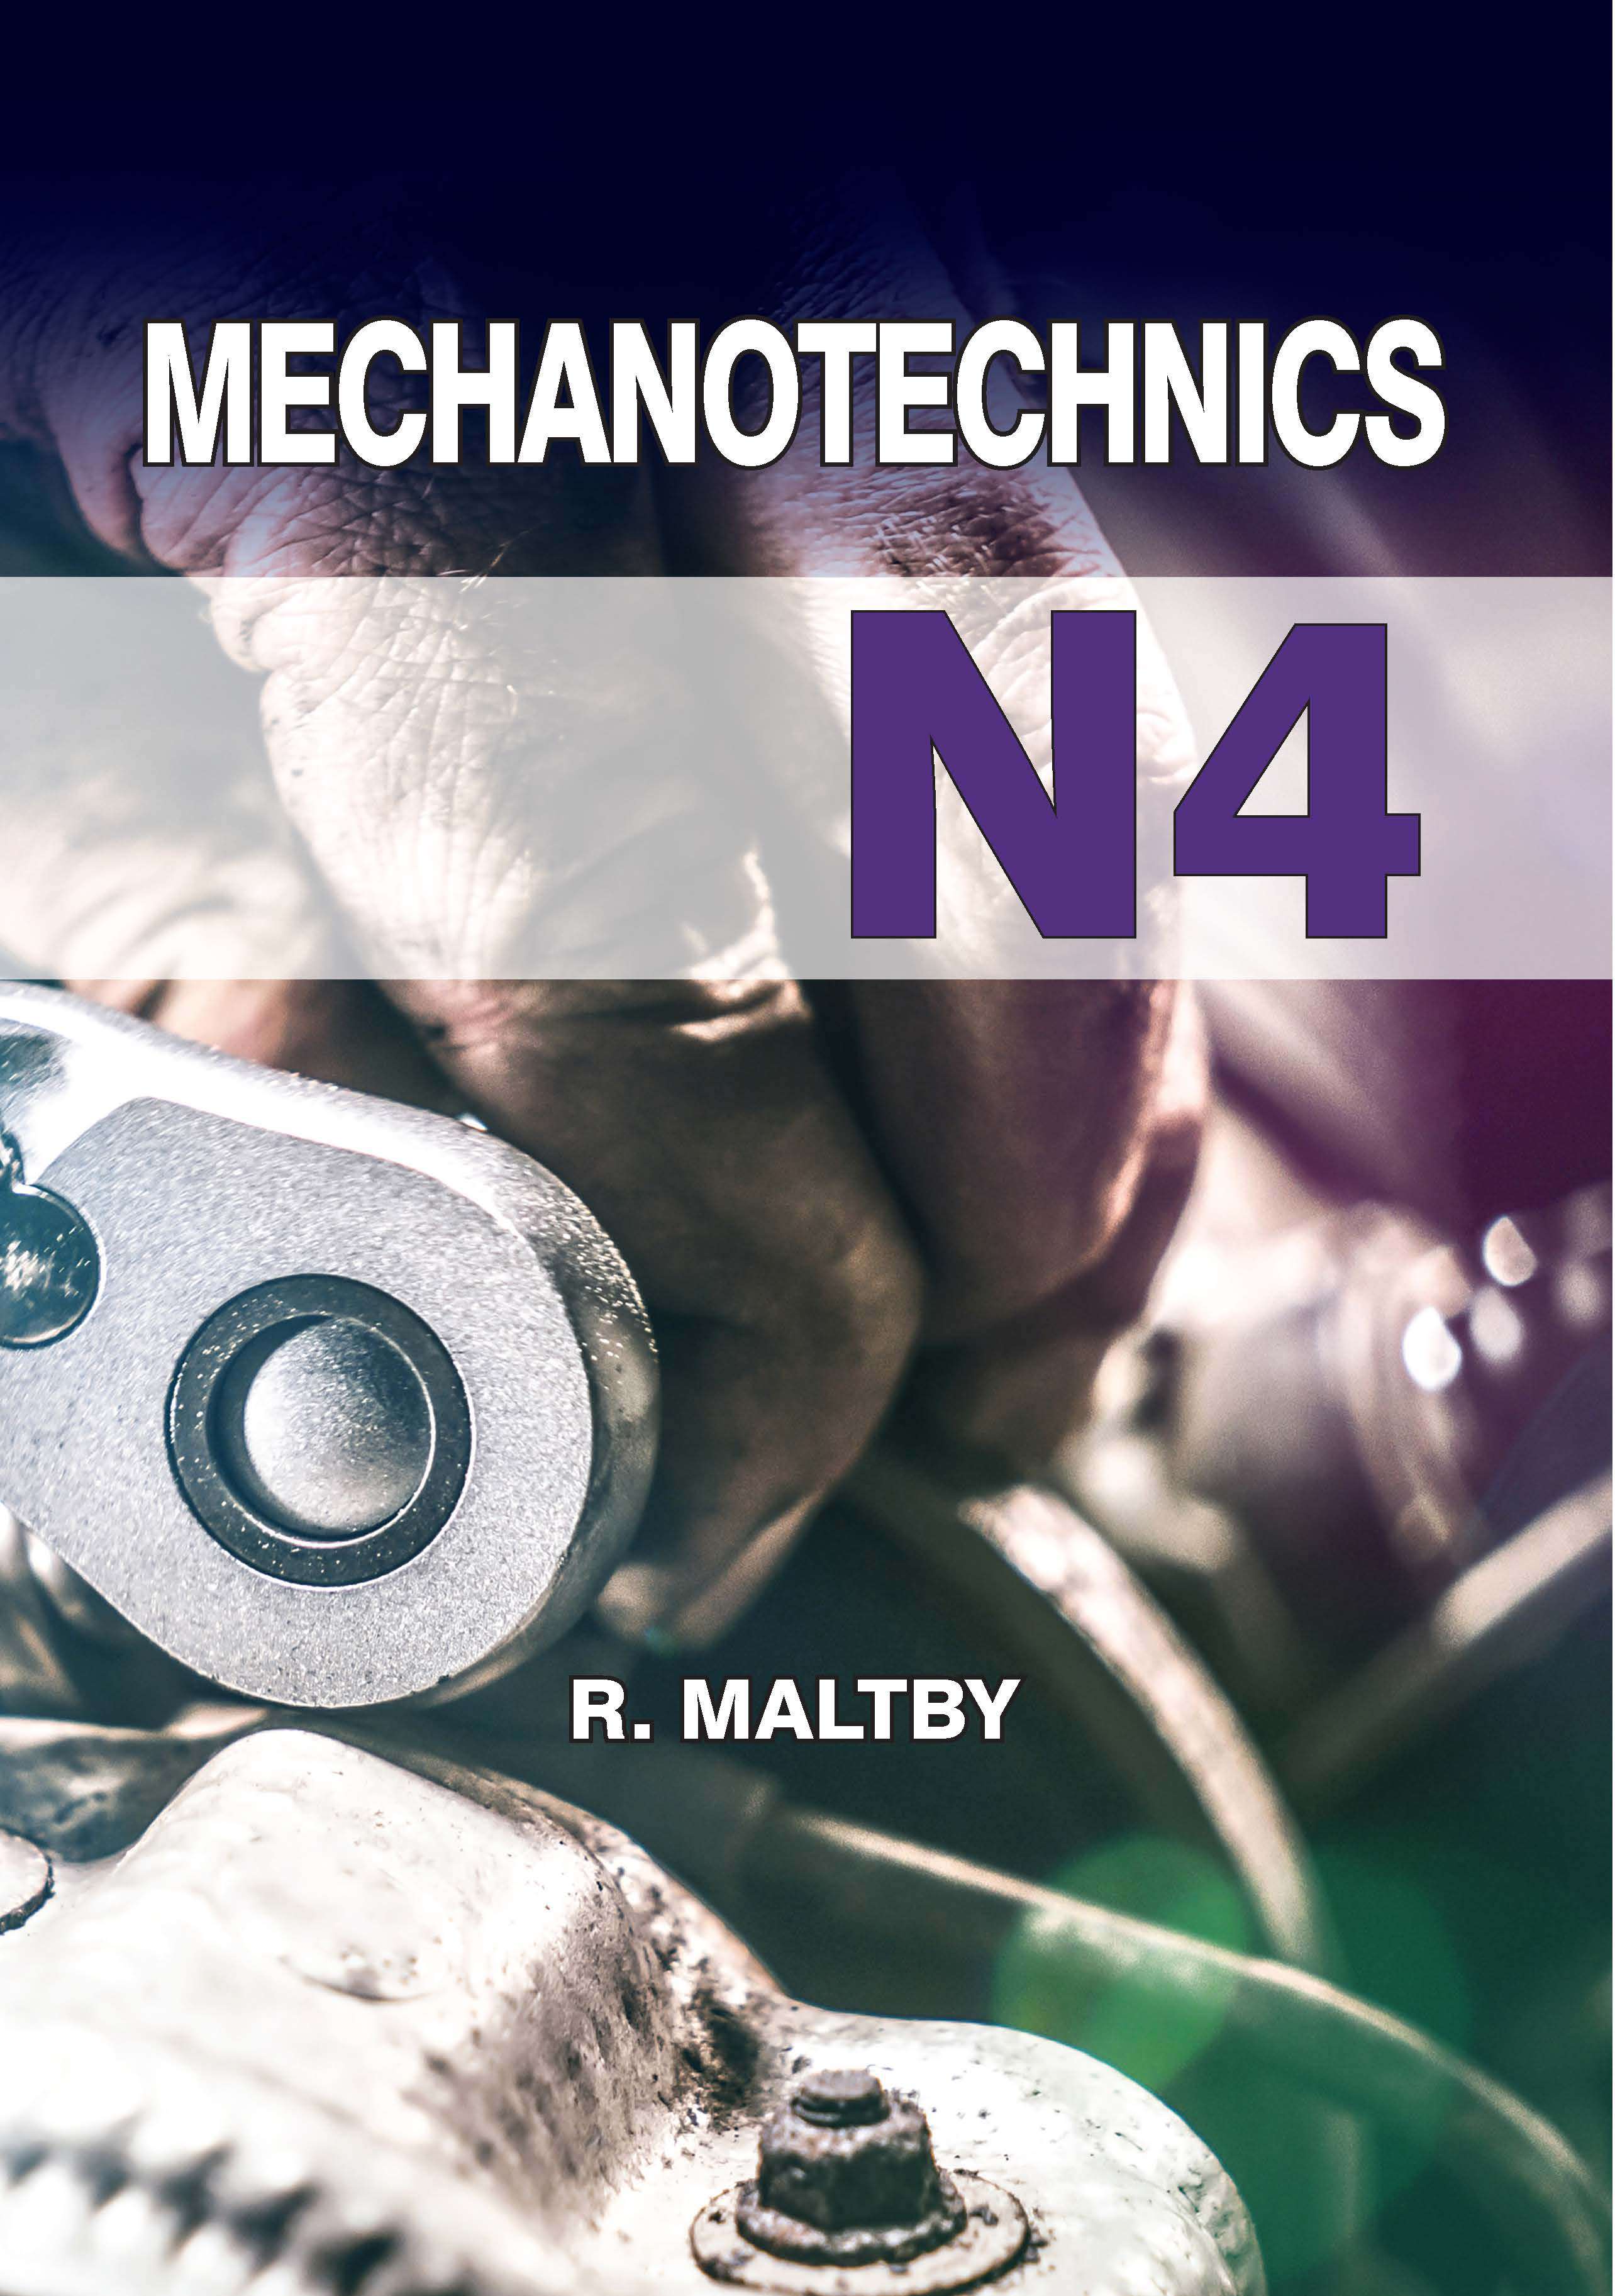 MECHANOTECHNICS N4 STUDENT TEXTBOOK Cover